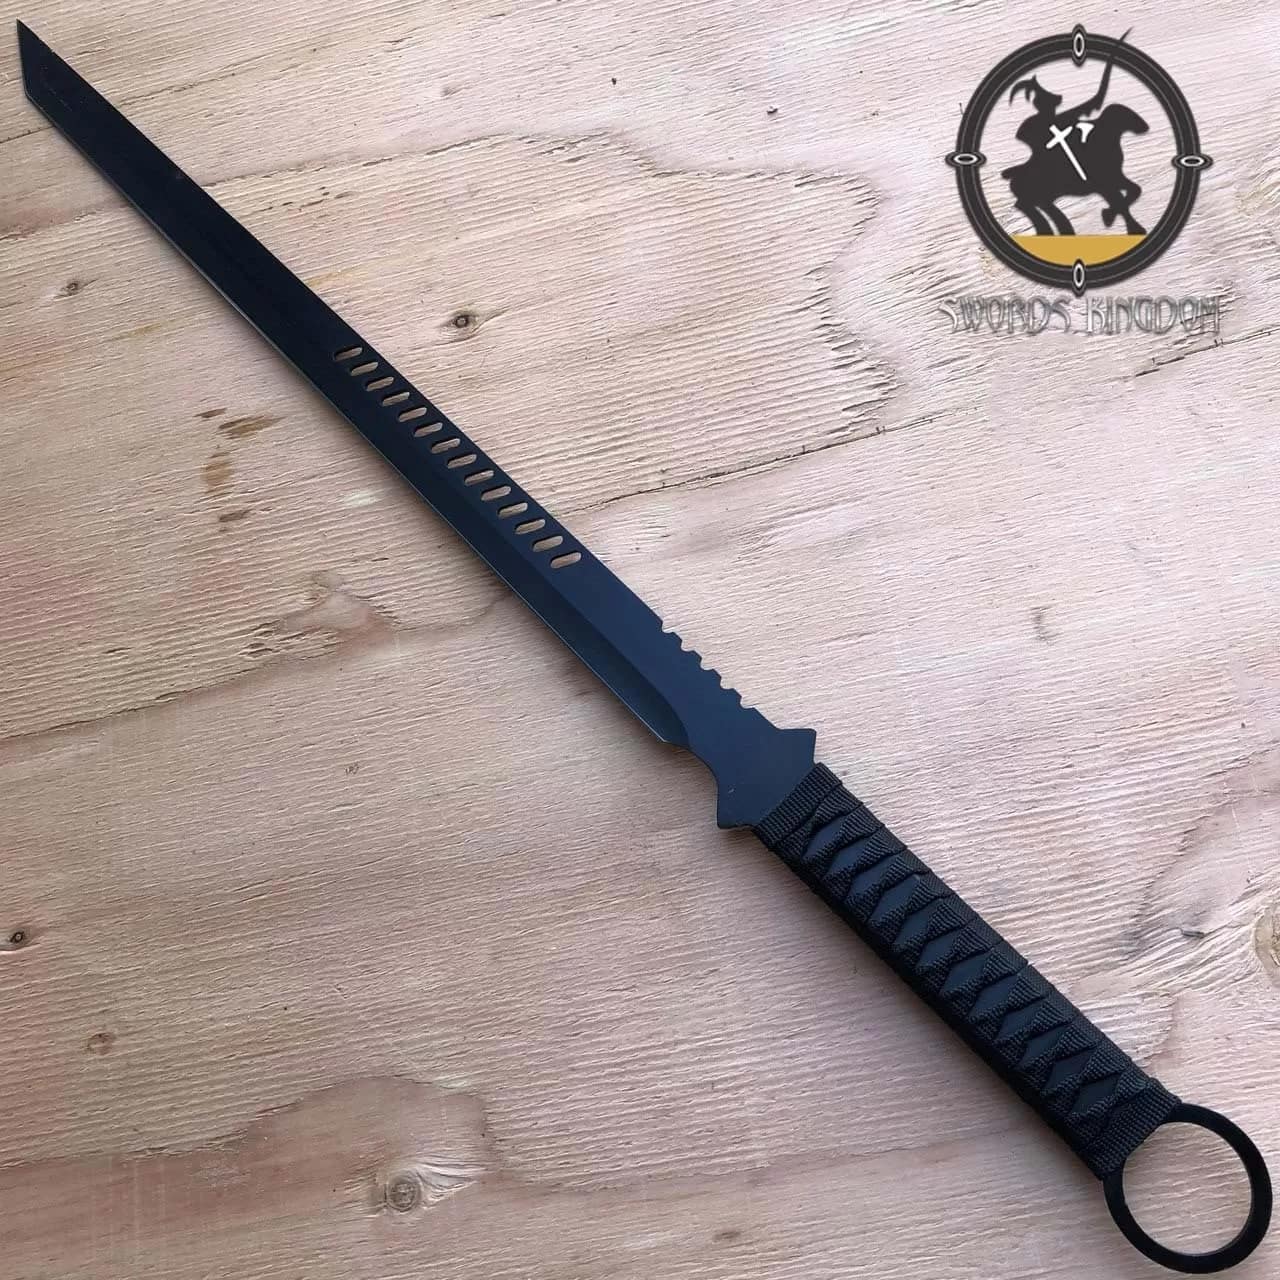 https://mlf1v2cerf7h.i.optimole.com/cb:jO1c.451af/w:auto/h:auto/q:mauto/f:best/id:8c3a2353bfa67e2a4f5e915d44f0fb88/https://swordskingdom.com/black-ninja-style_full-tang-tactical_sword-with_throwing-knife-2.jpg